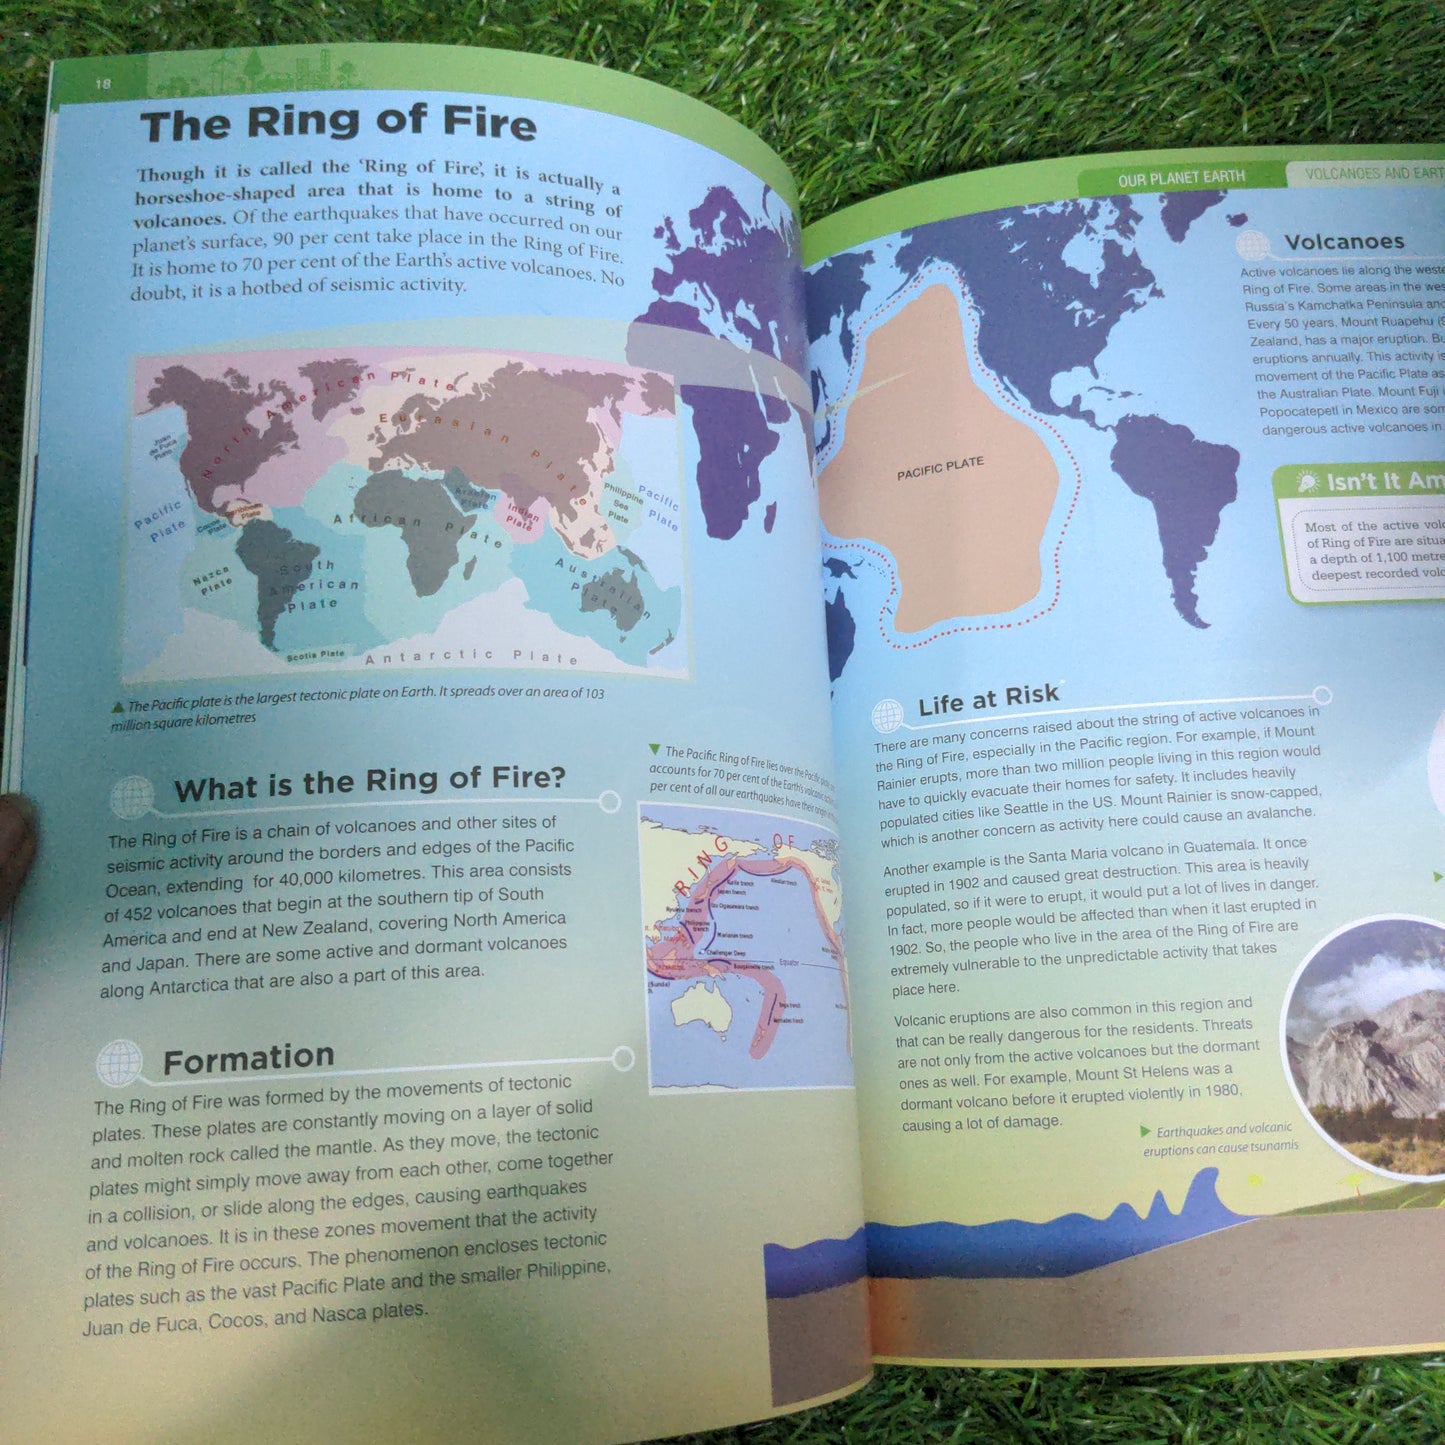 Encyclopedia  - Our Planet Earth: Volcanoes & Earthquakes